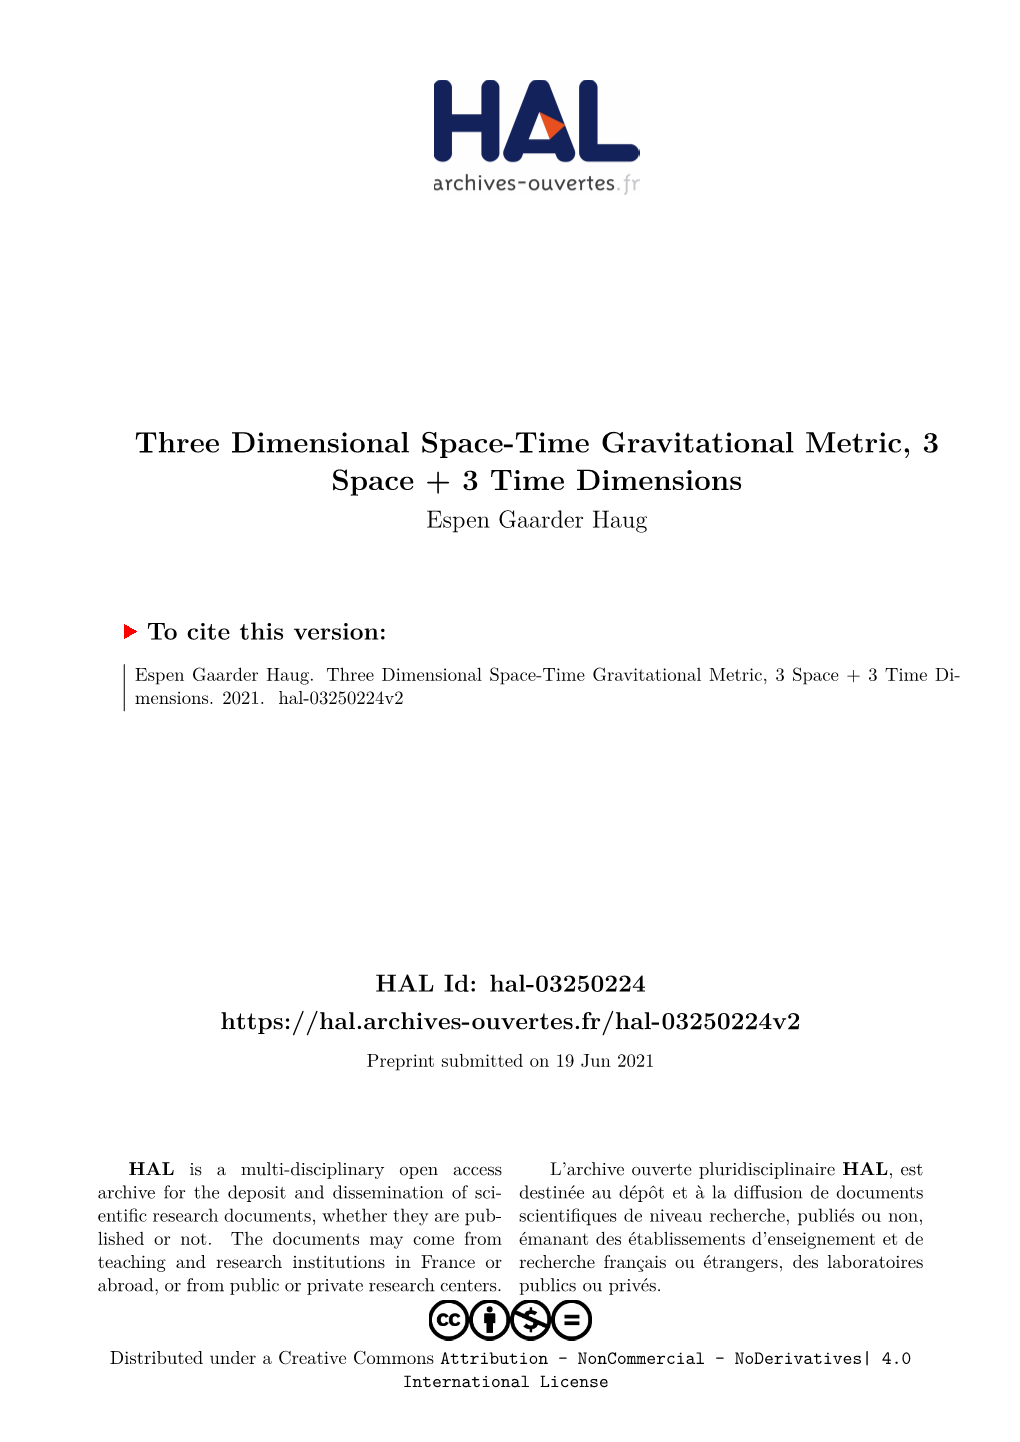 Three Dimensional Space-Time Gravitational Metric, 3 Space + 3 Time Dimensions Espen Gaarder Haug